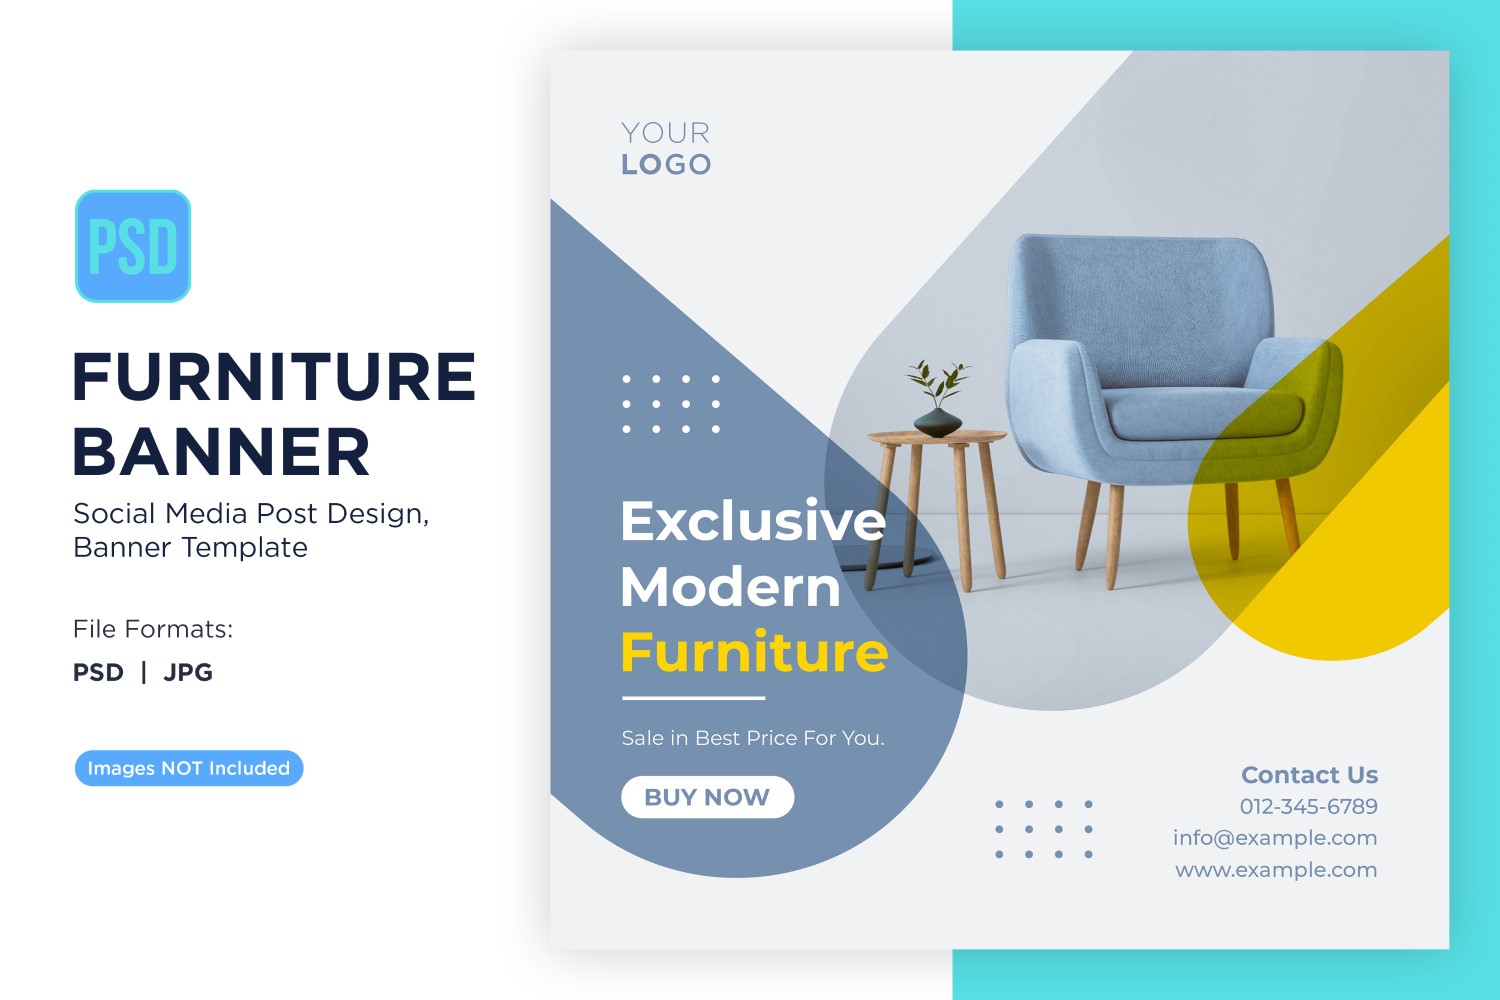 Exclusive Modern Furniture Banner Design Template